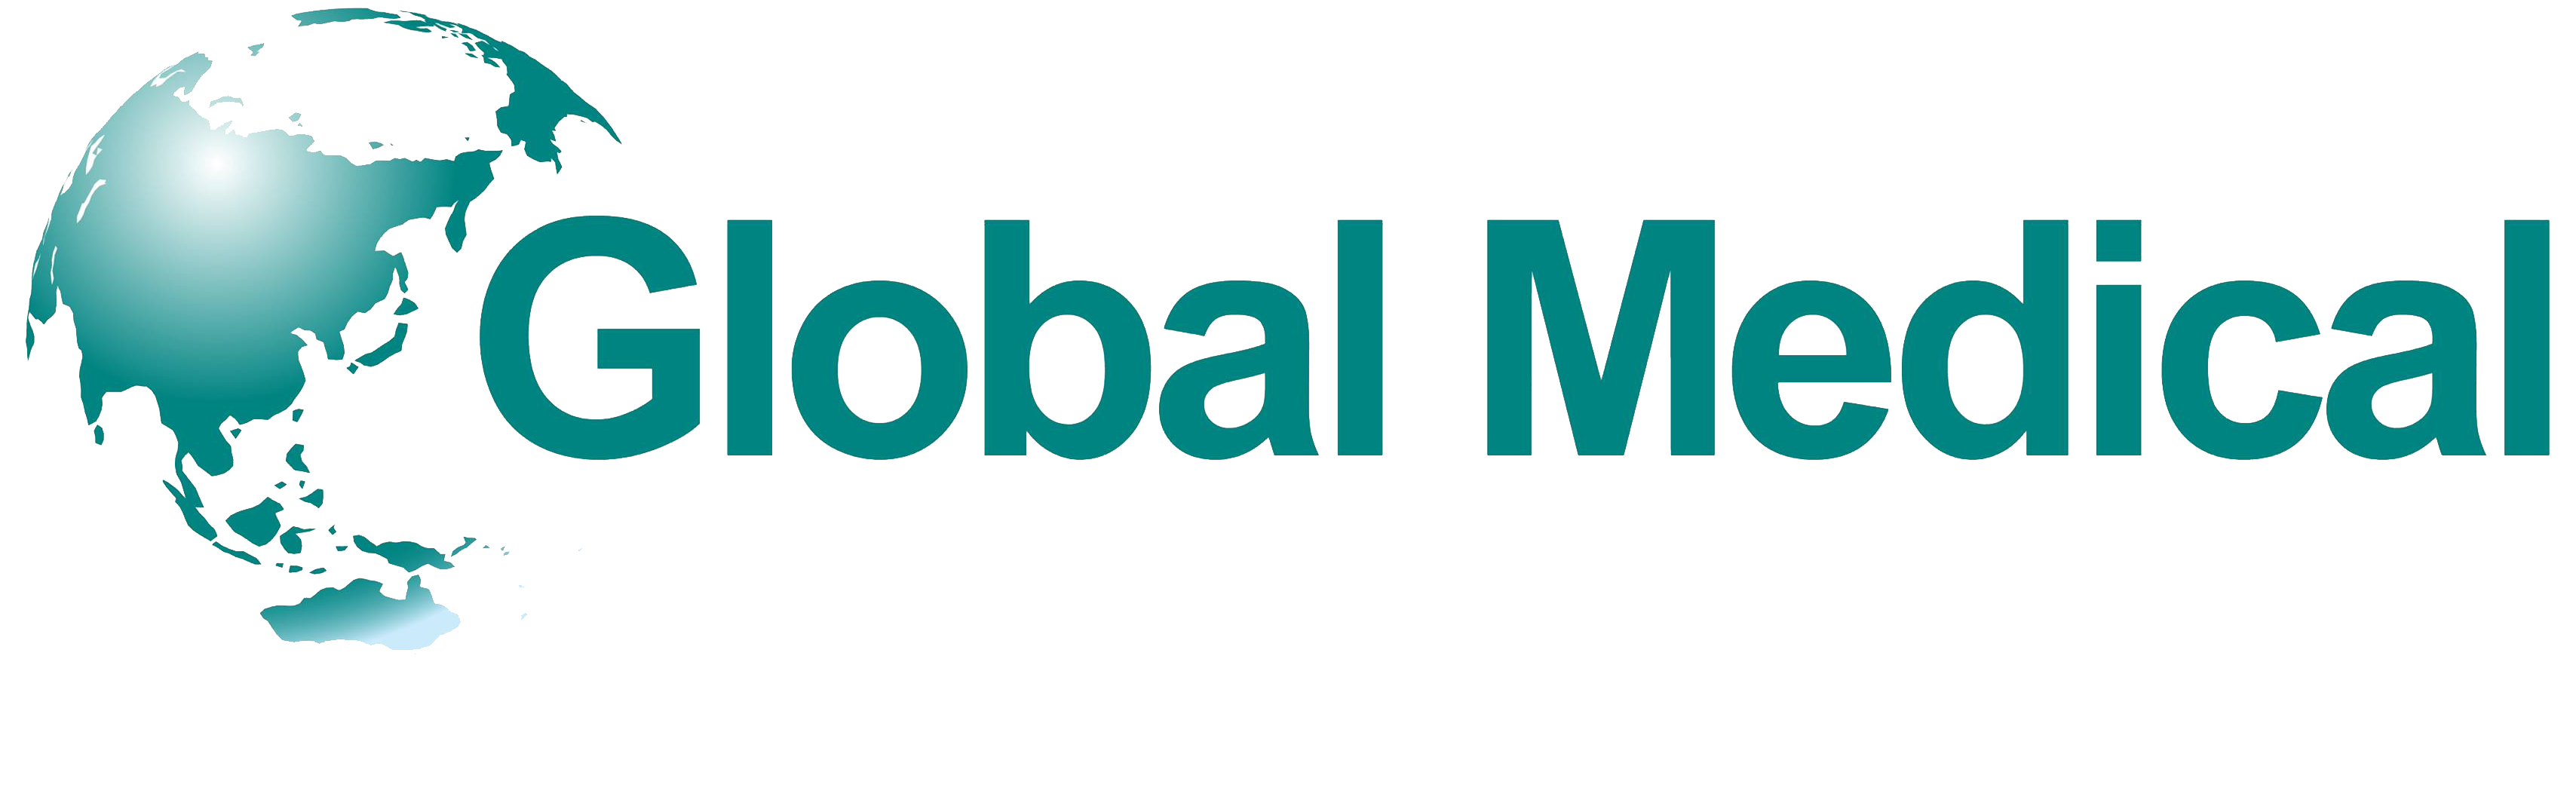 Global Medical Supplies & Equipment